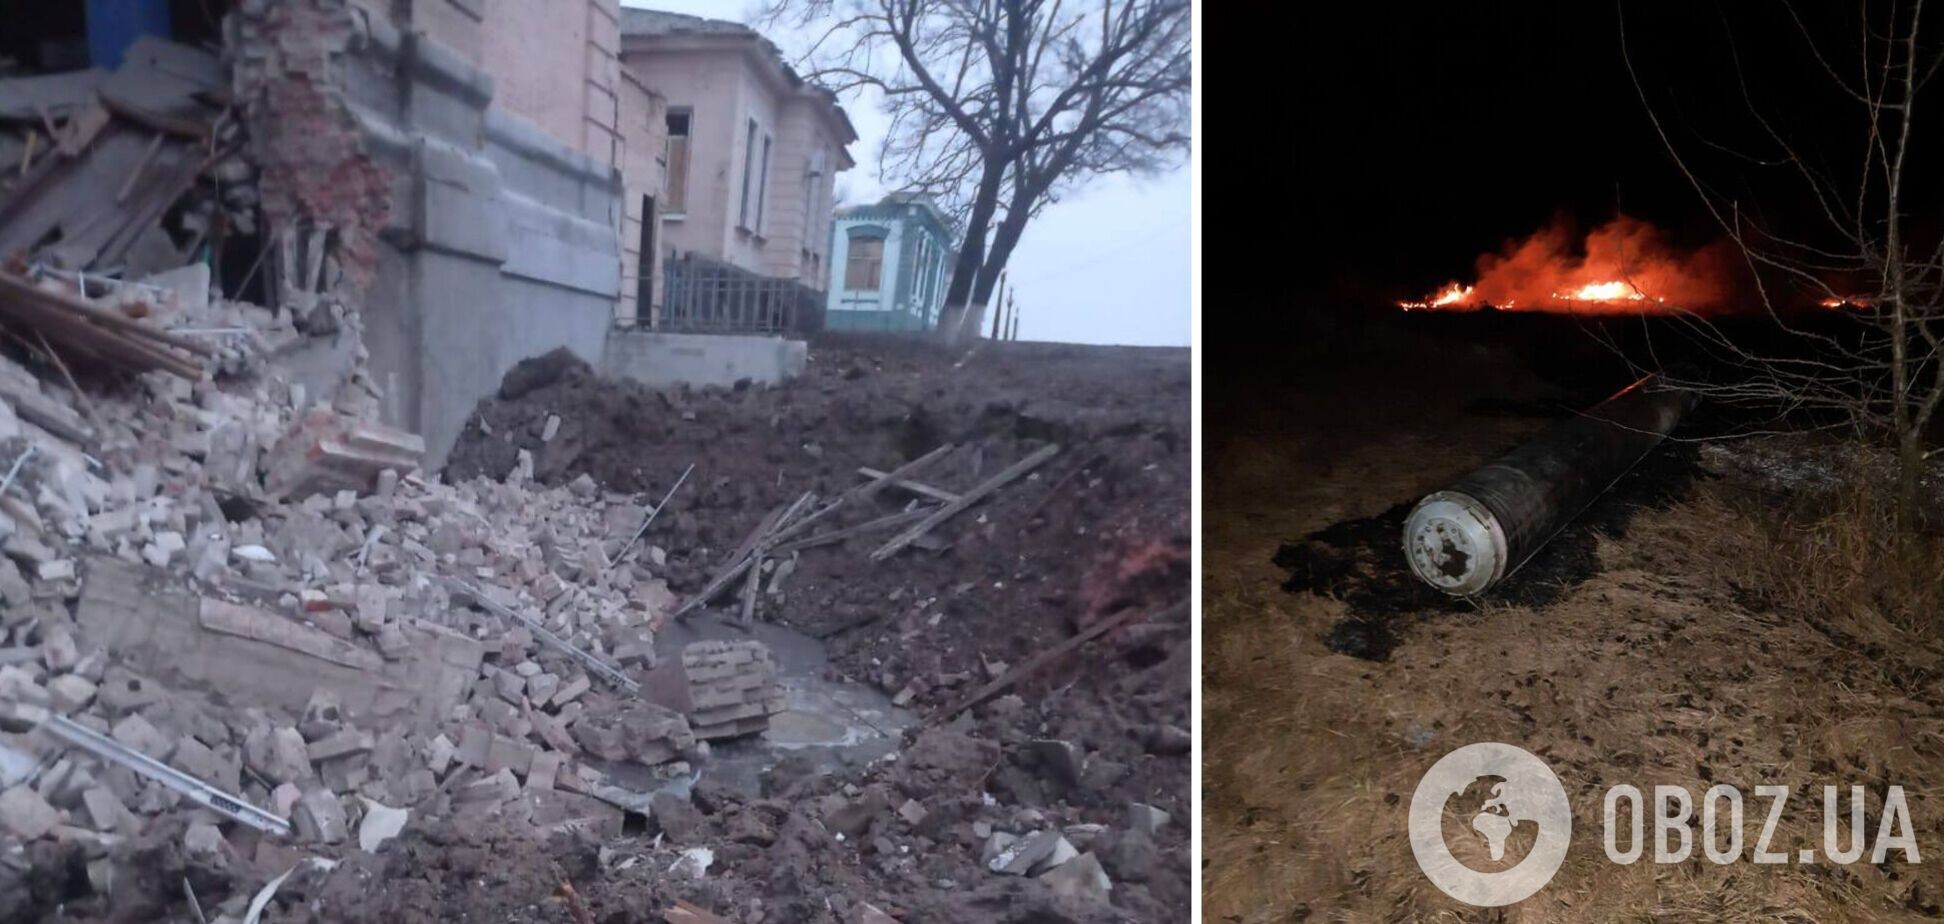 Войска РФ нанесли удар по Купянску: разрушена стена здания, поврежден автомобиль. Фото